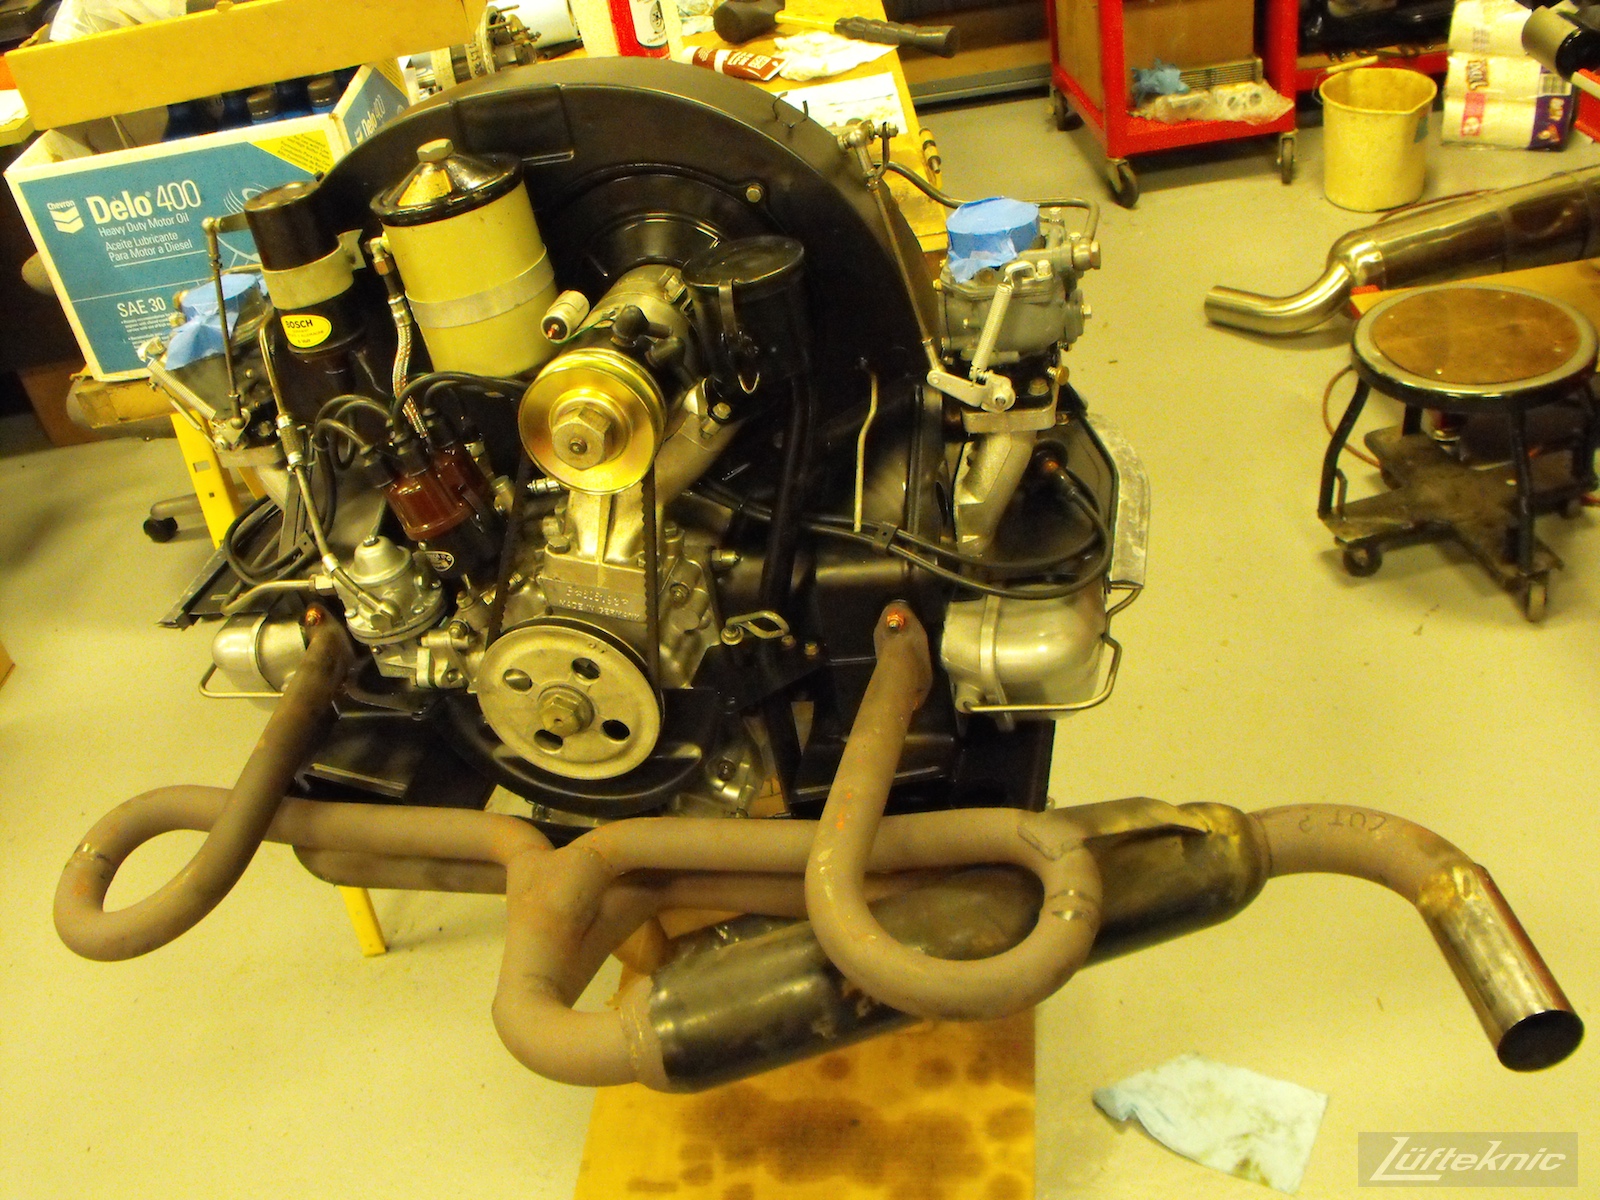 Engine with muffler for a 1961 Porsche 356B Roadster restoration.